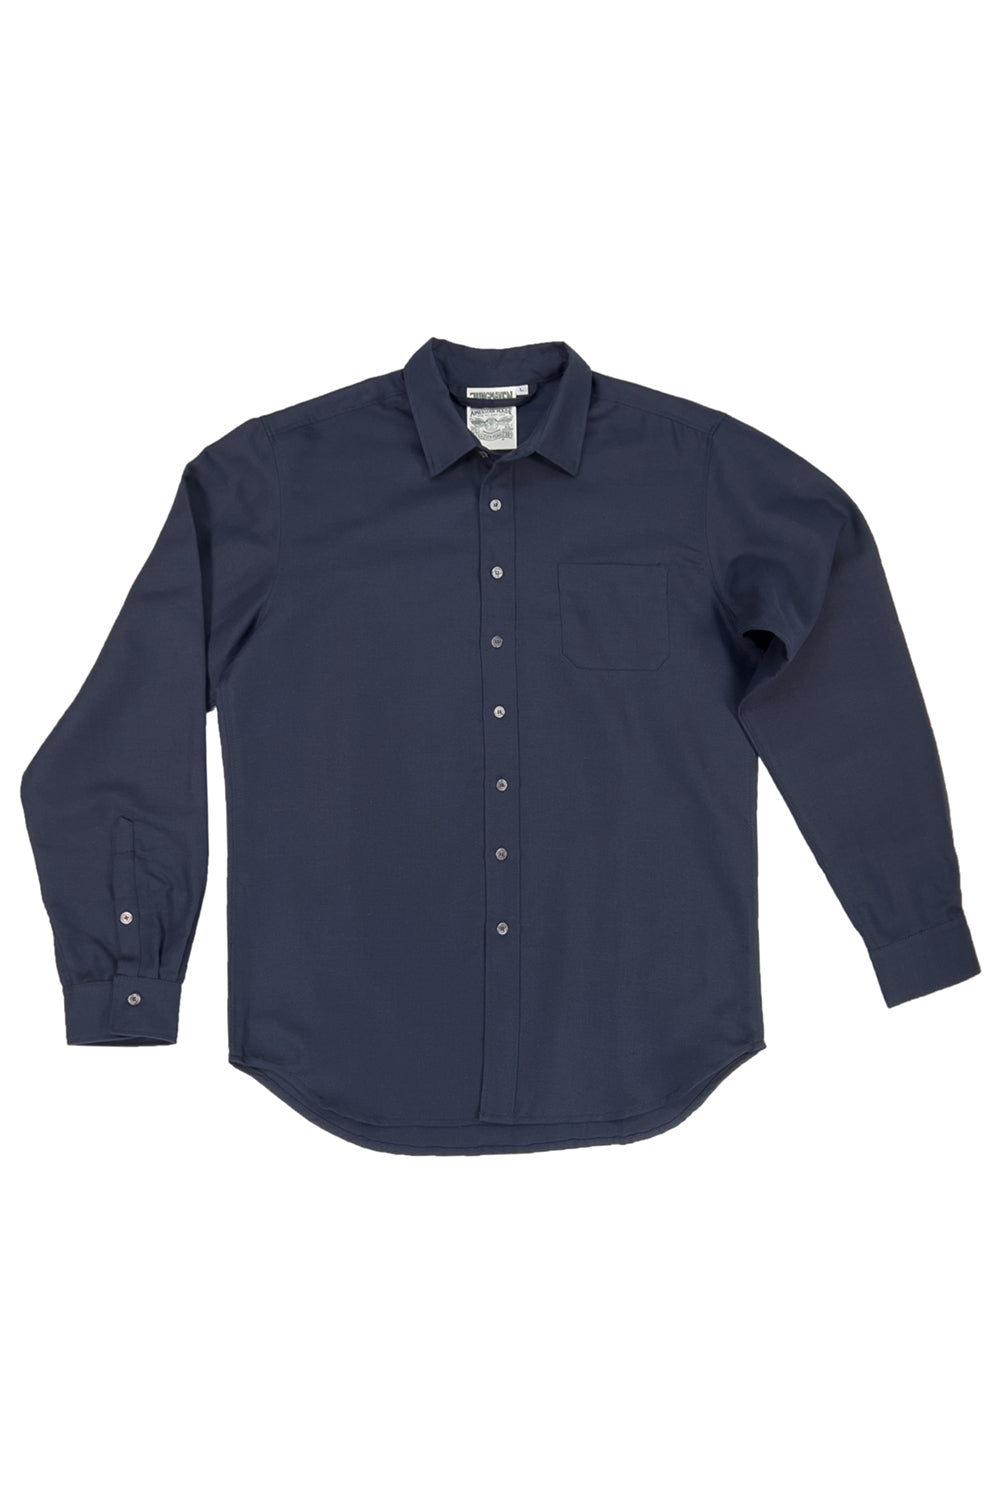 Hampton Shirt | Jungmaven Hemp Clothing & Accessories / Color: Navy